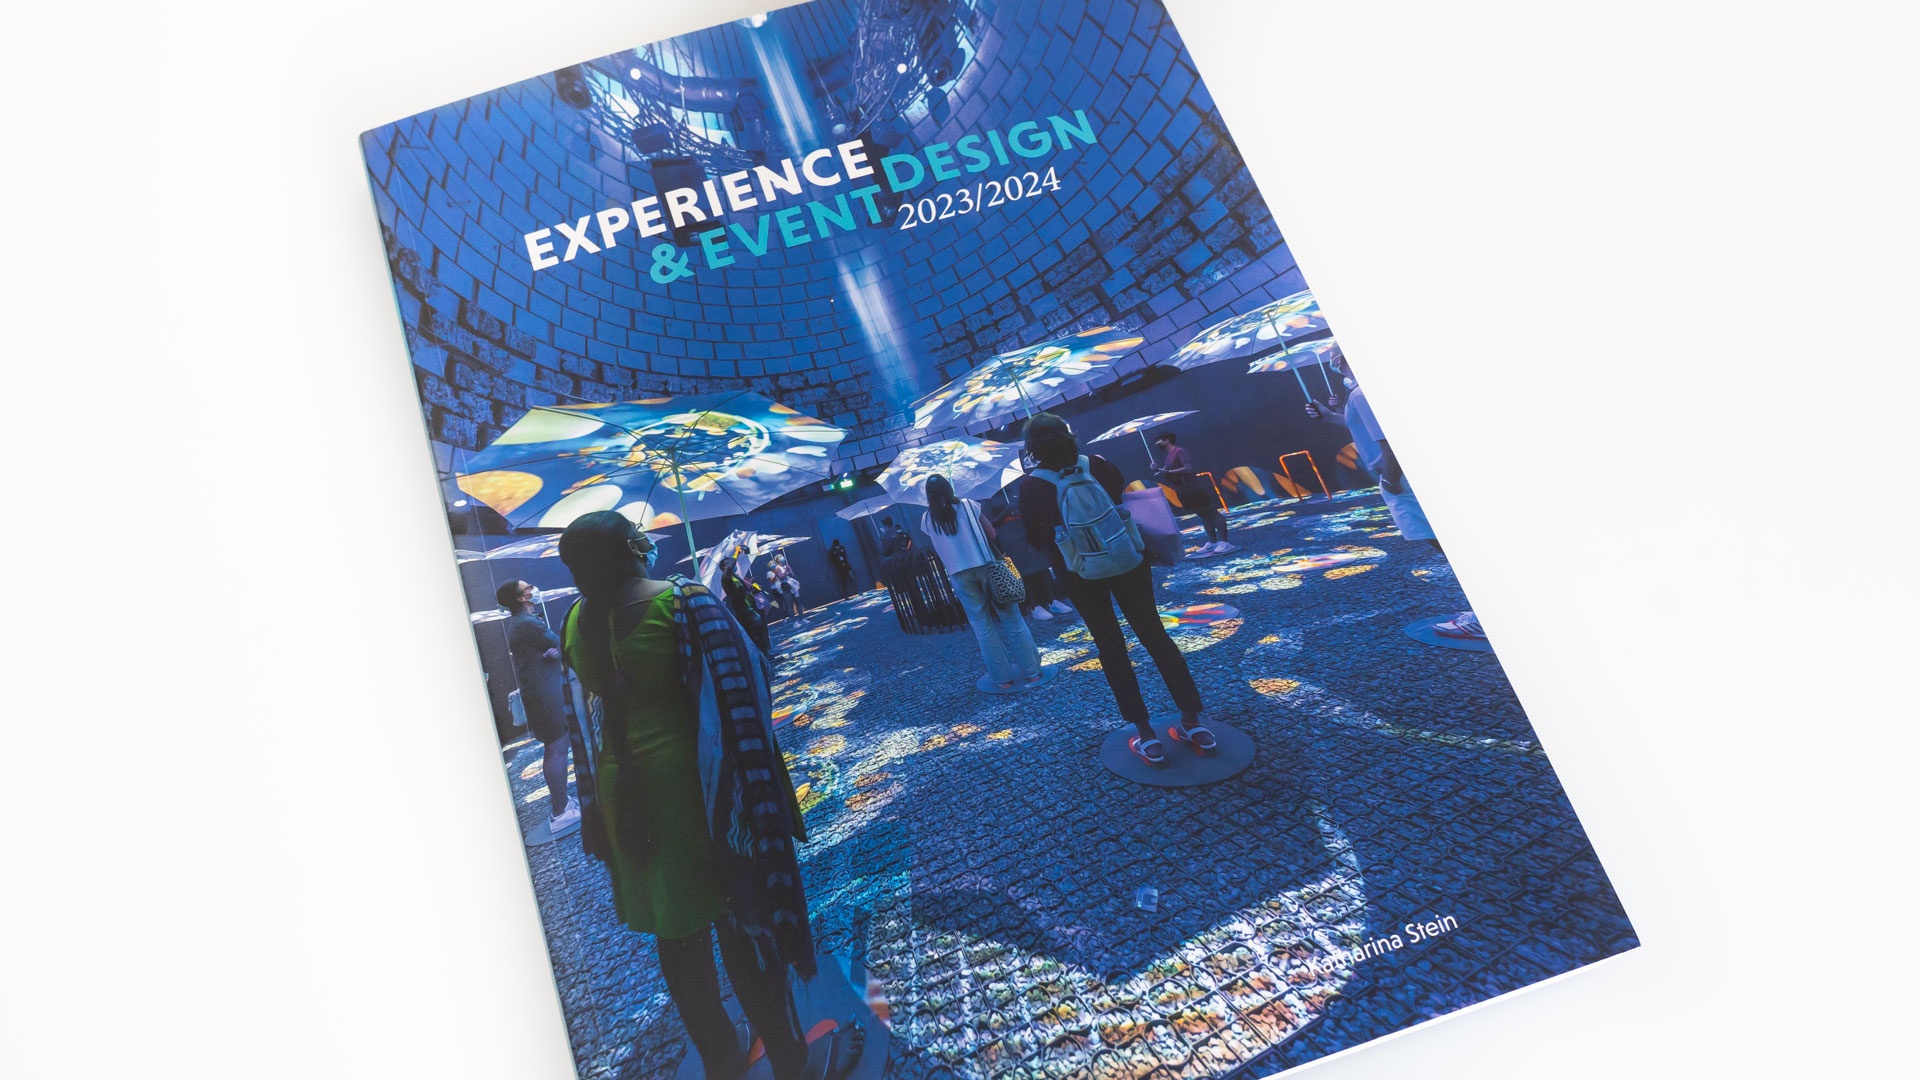 Experience & Eventdesign 2023/2024